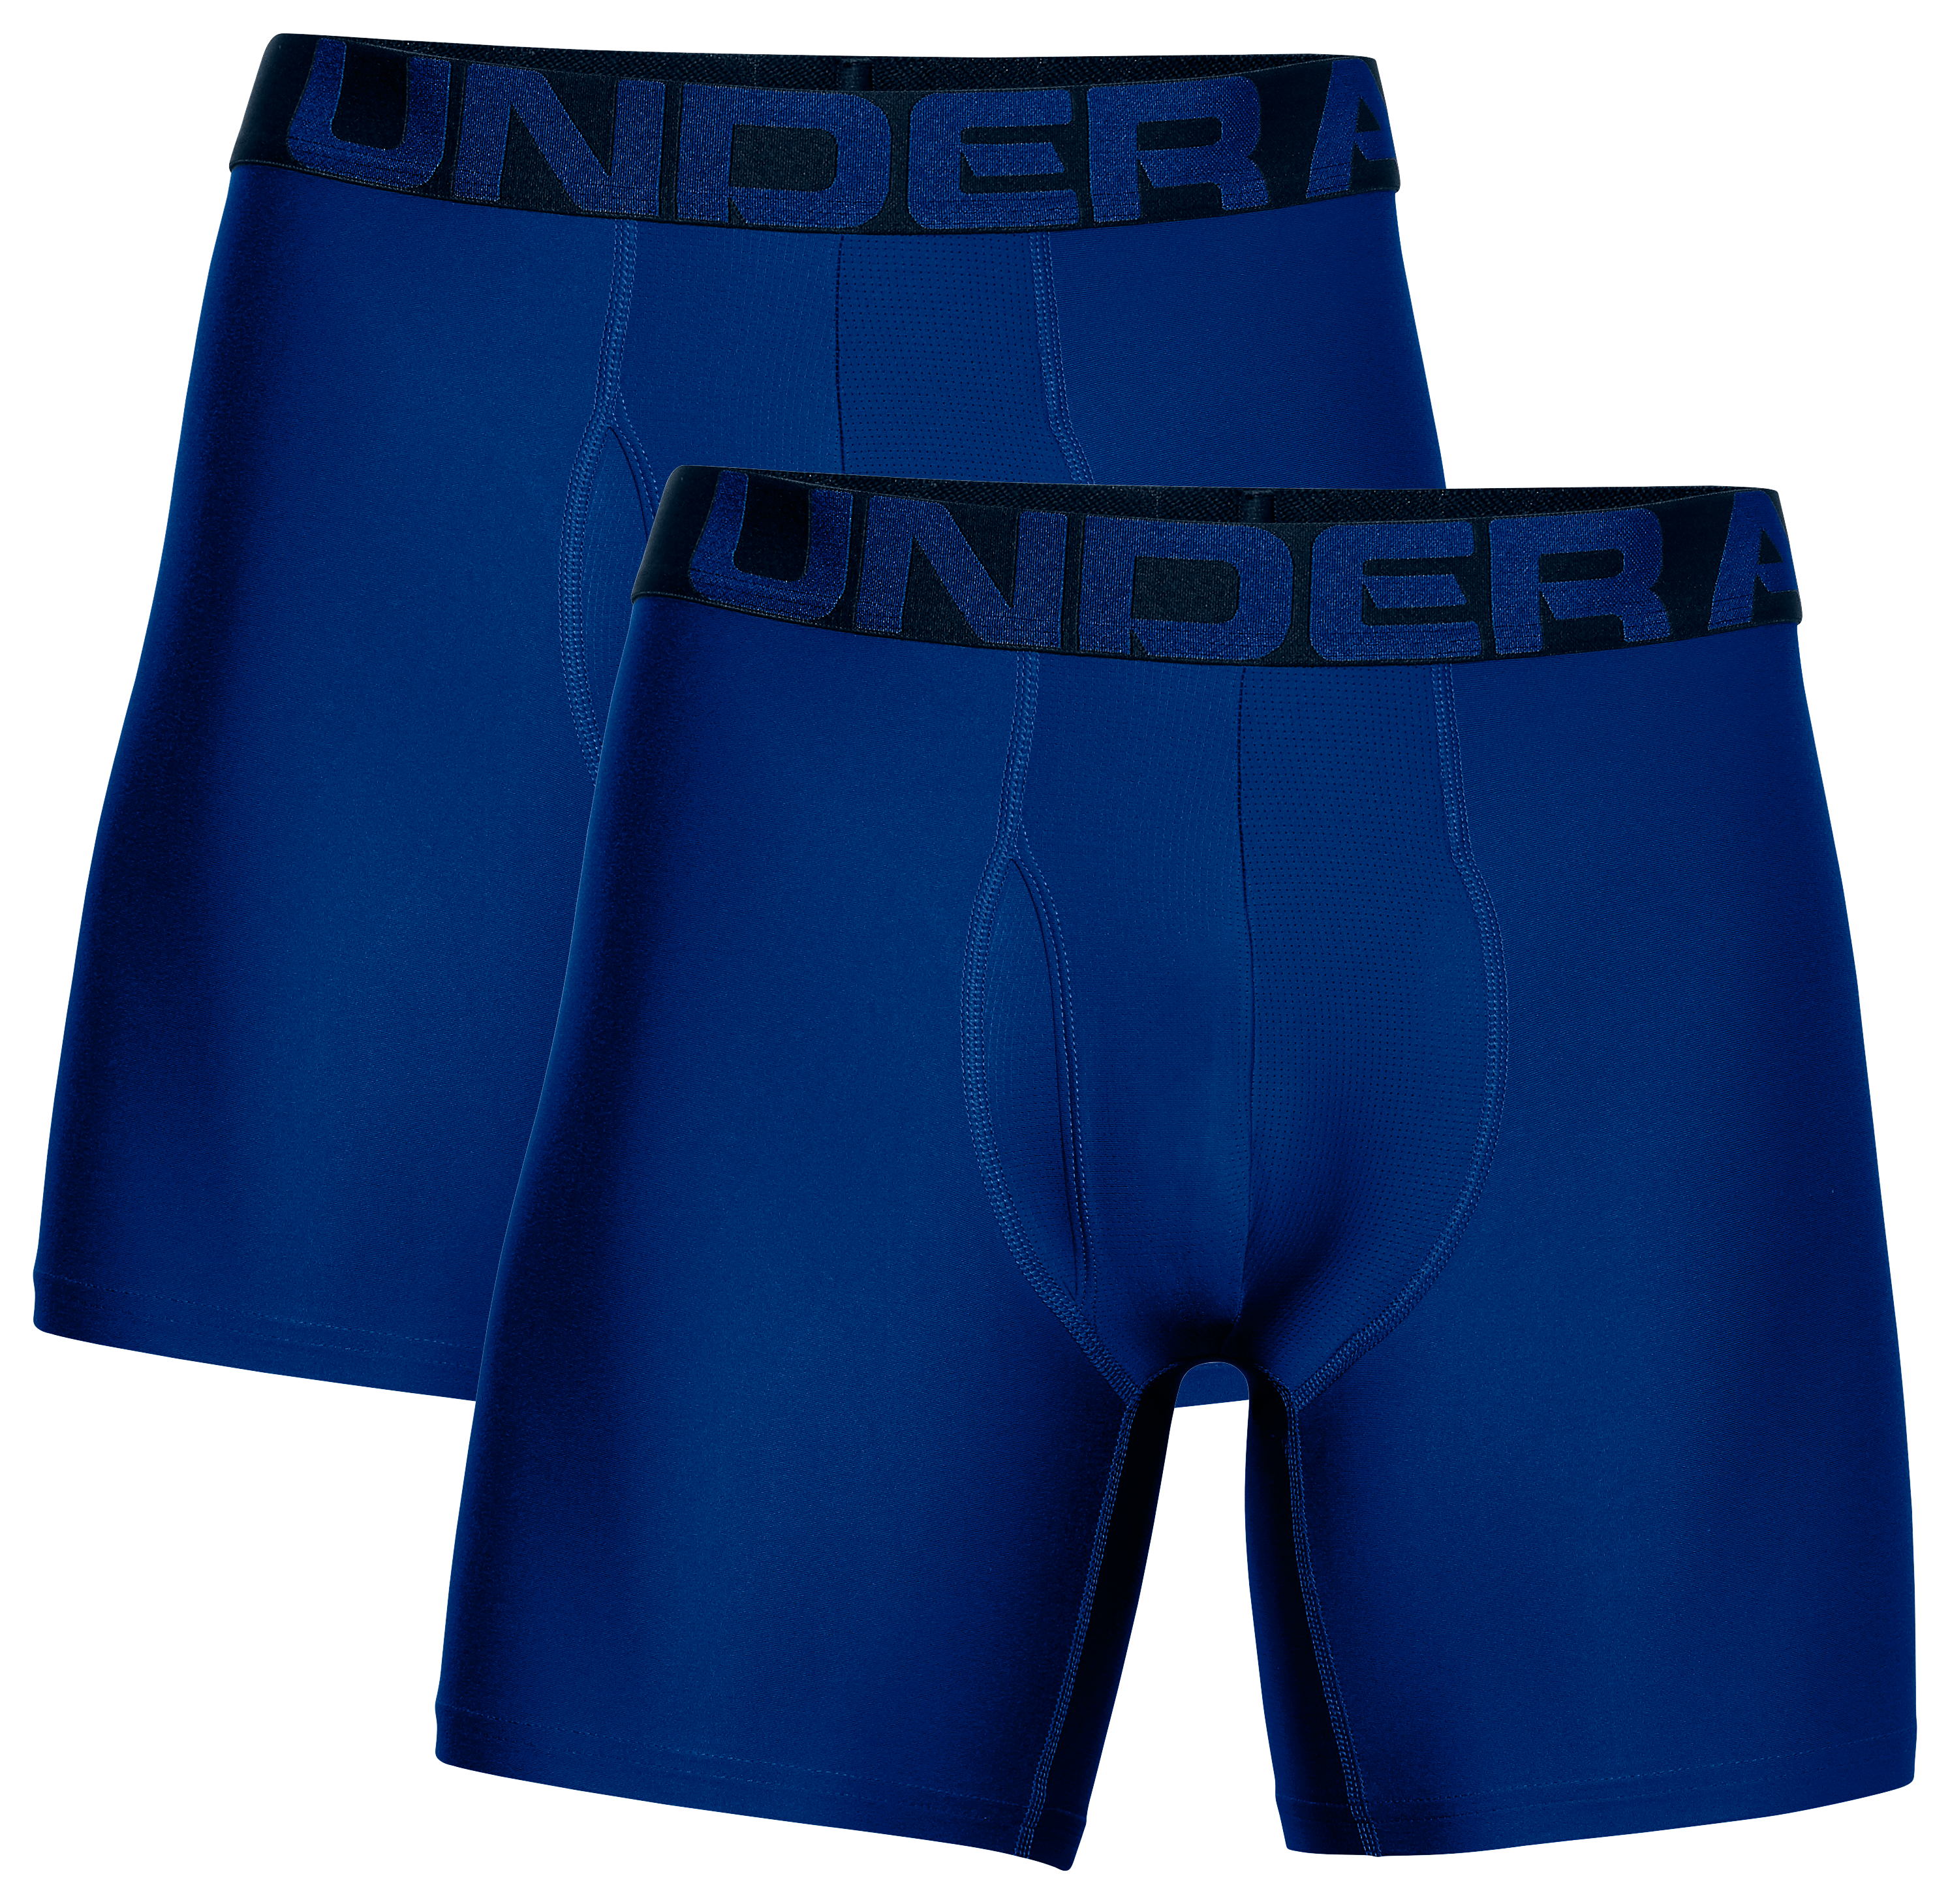 Under Armor Boxer Briefs Size 5X Mens Tech 6 Boxer Jock Underwear 2 Pack  54-56 